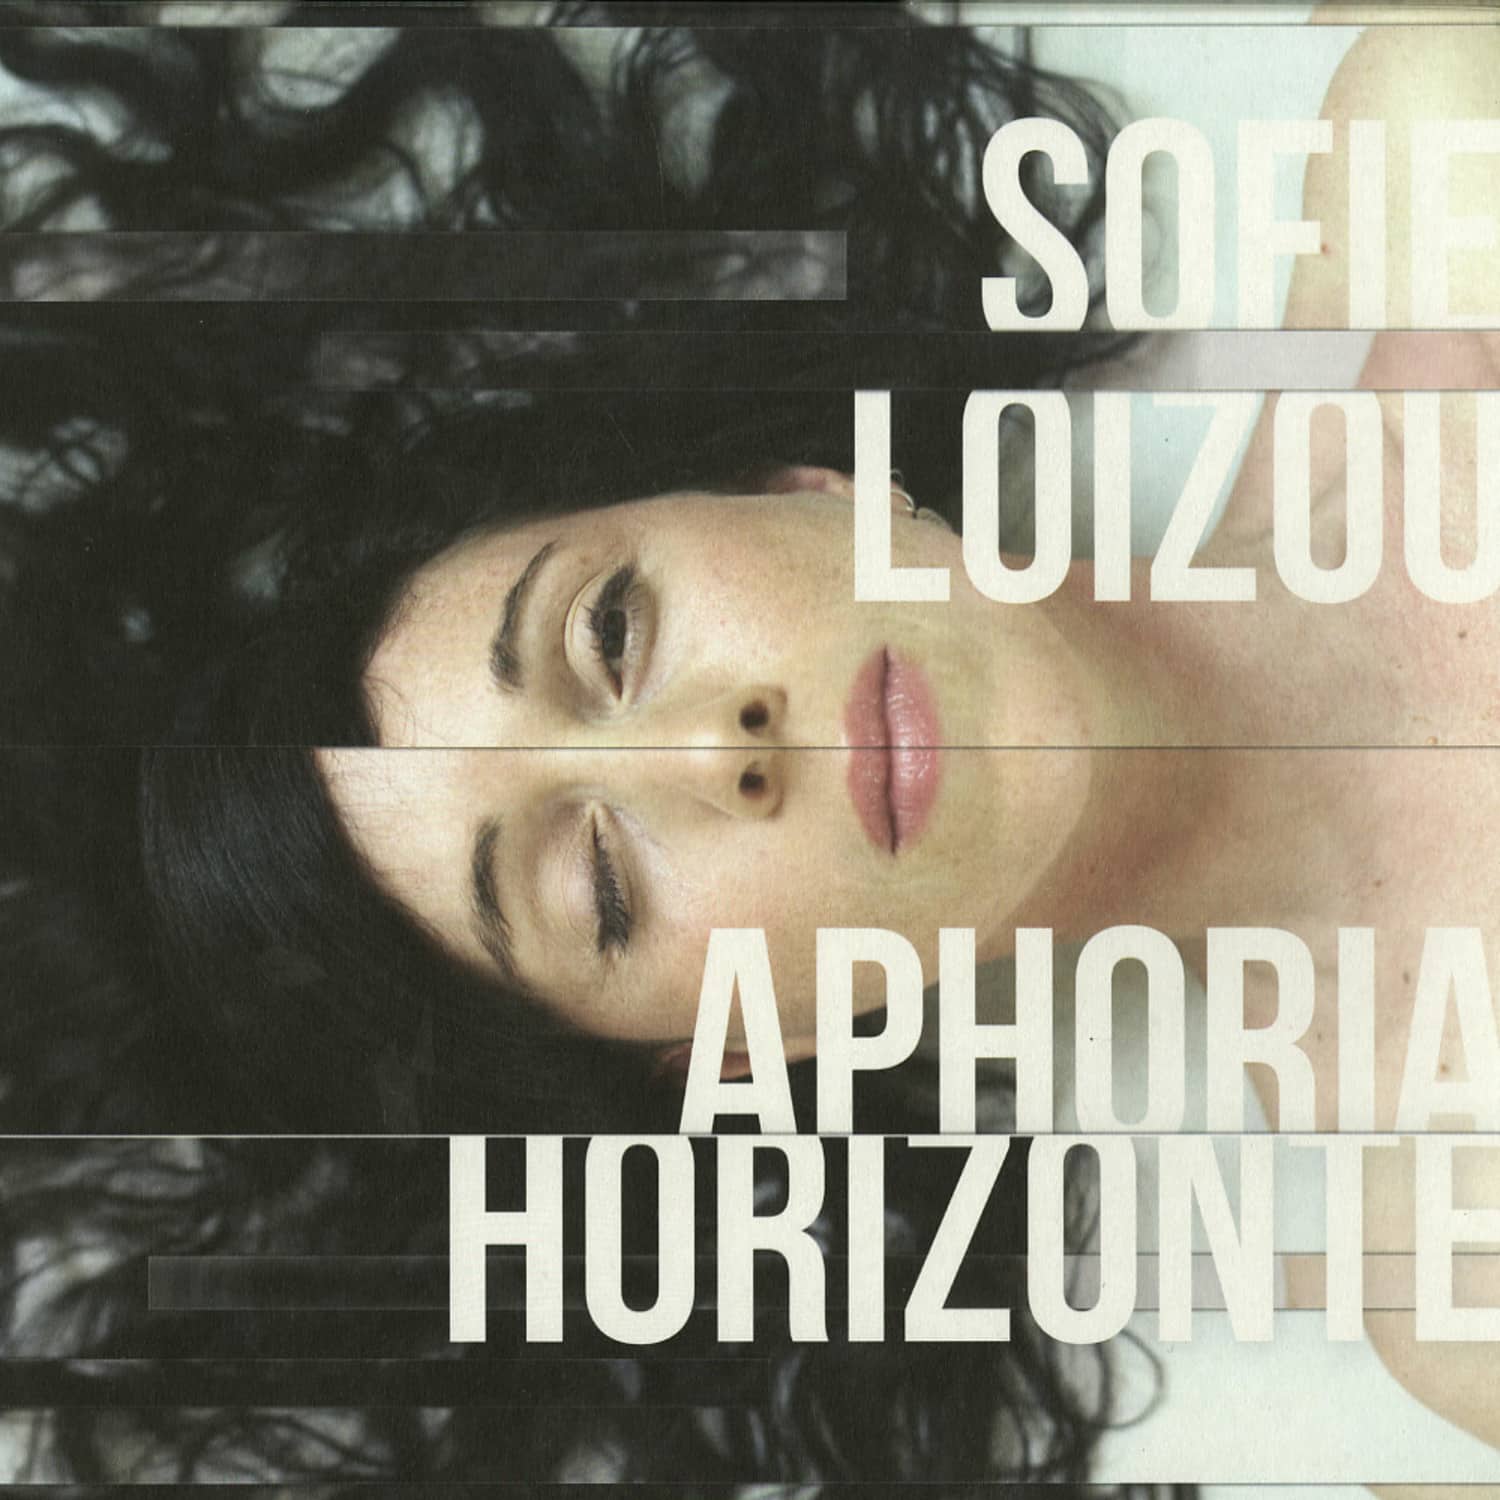 Sofie Loizou - APHORIA HORIZONTE 